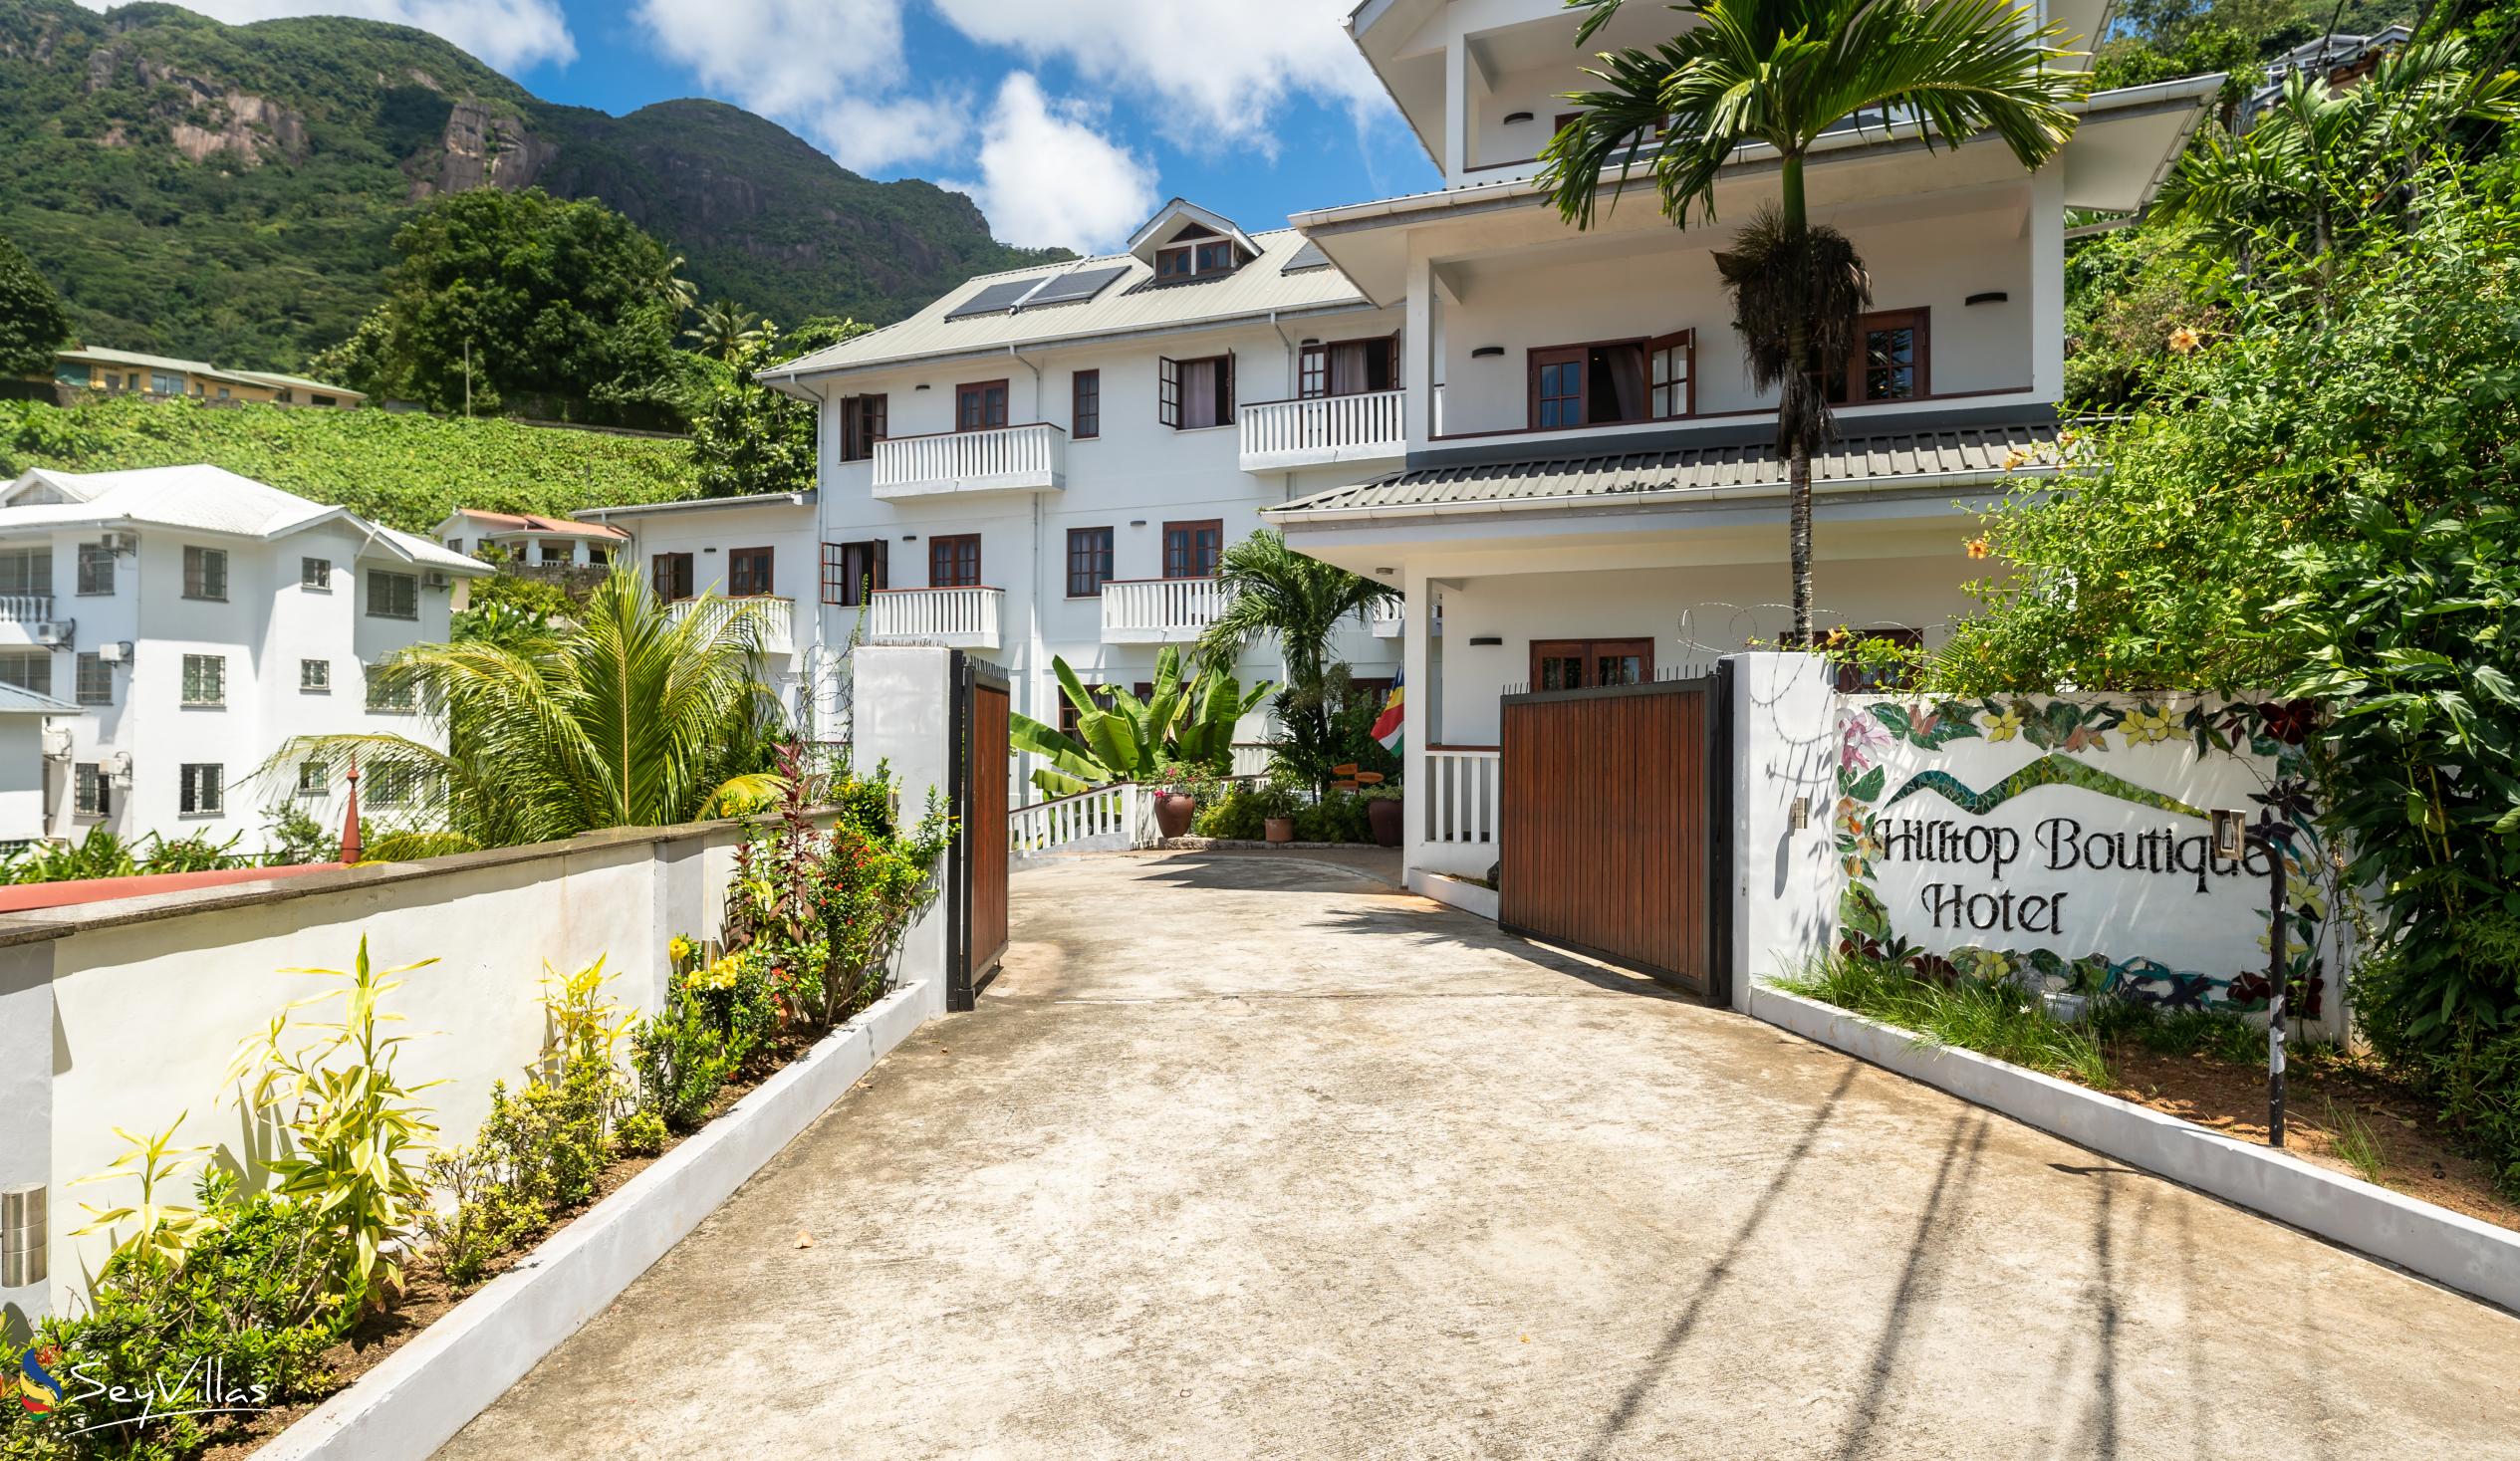 Foto 6: Hilltop Boutique Hotel - Aussenbereich - Mahé (Seychellen)